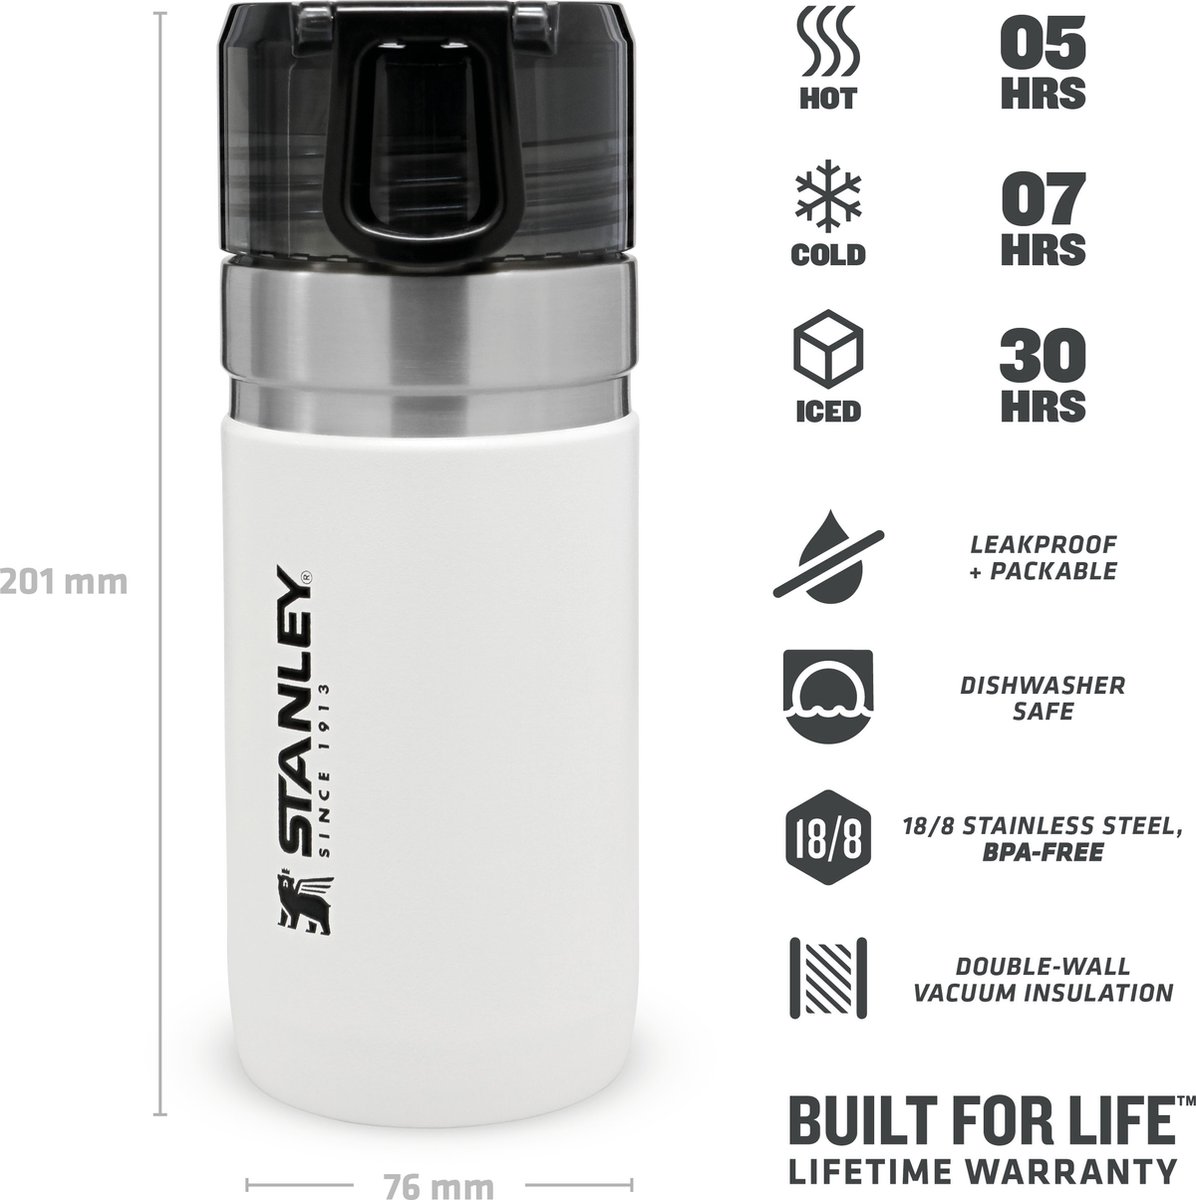 Stanley 500 ml Polar White Thermos - Built-In Pour Spout